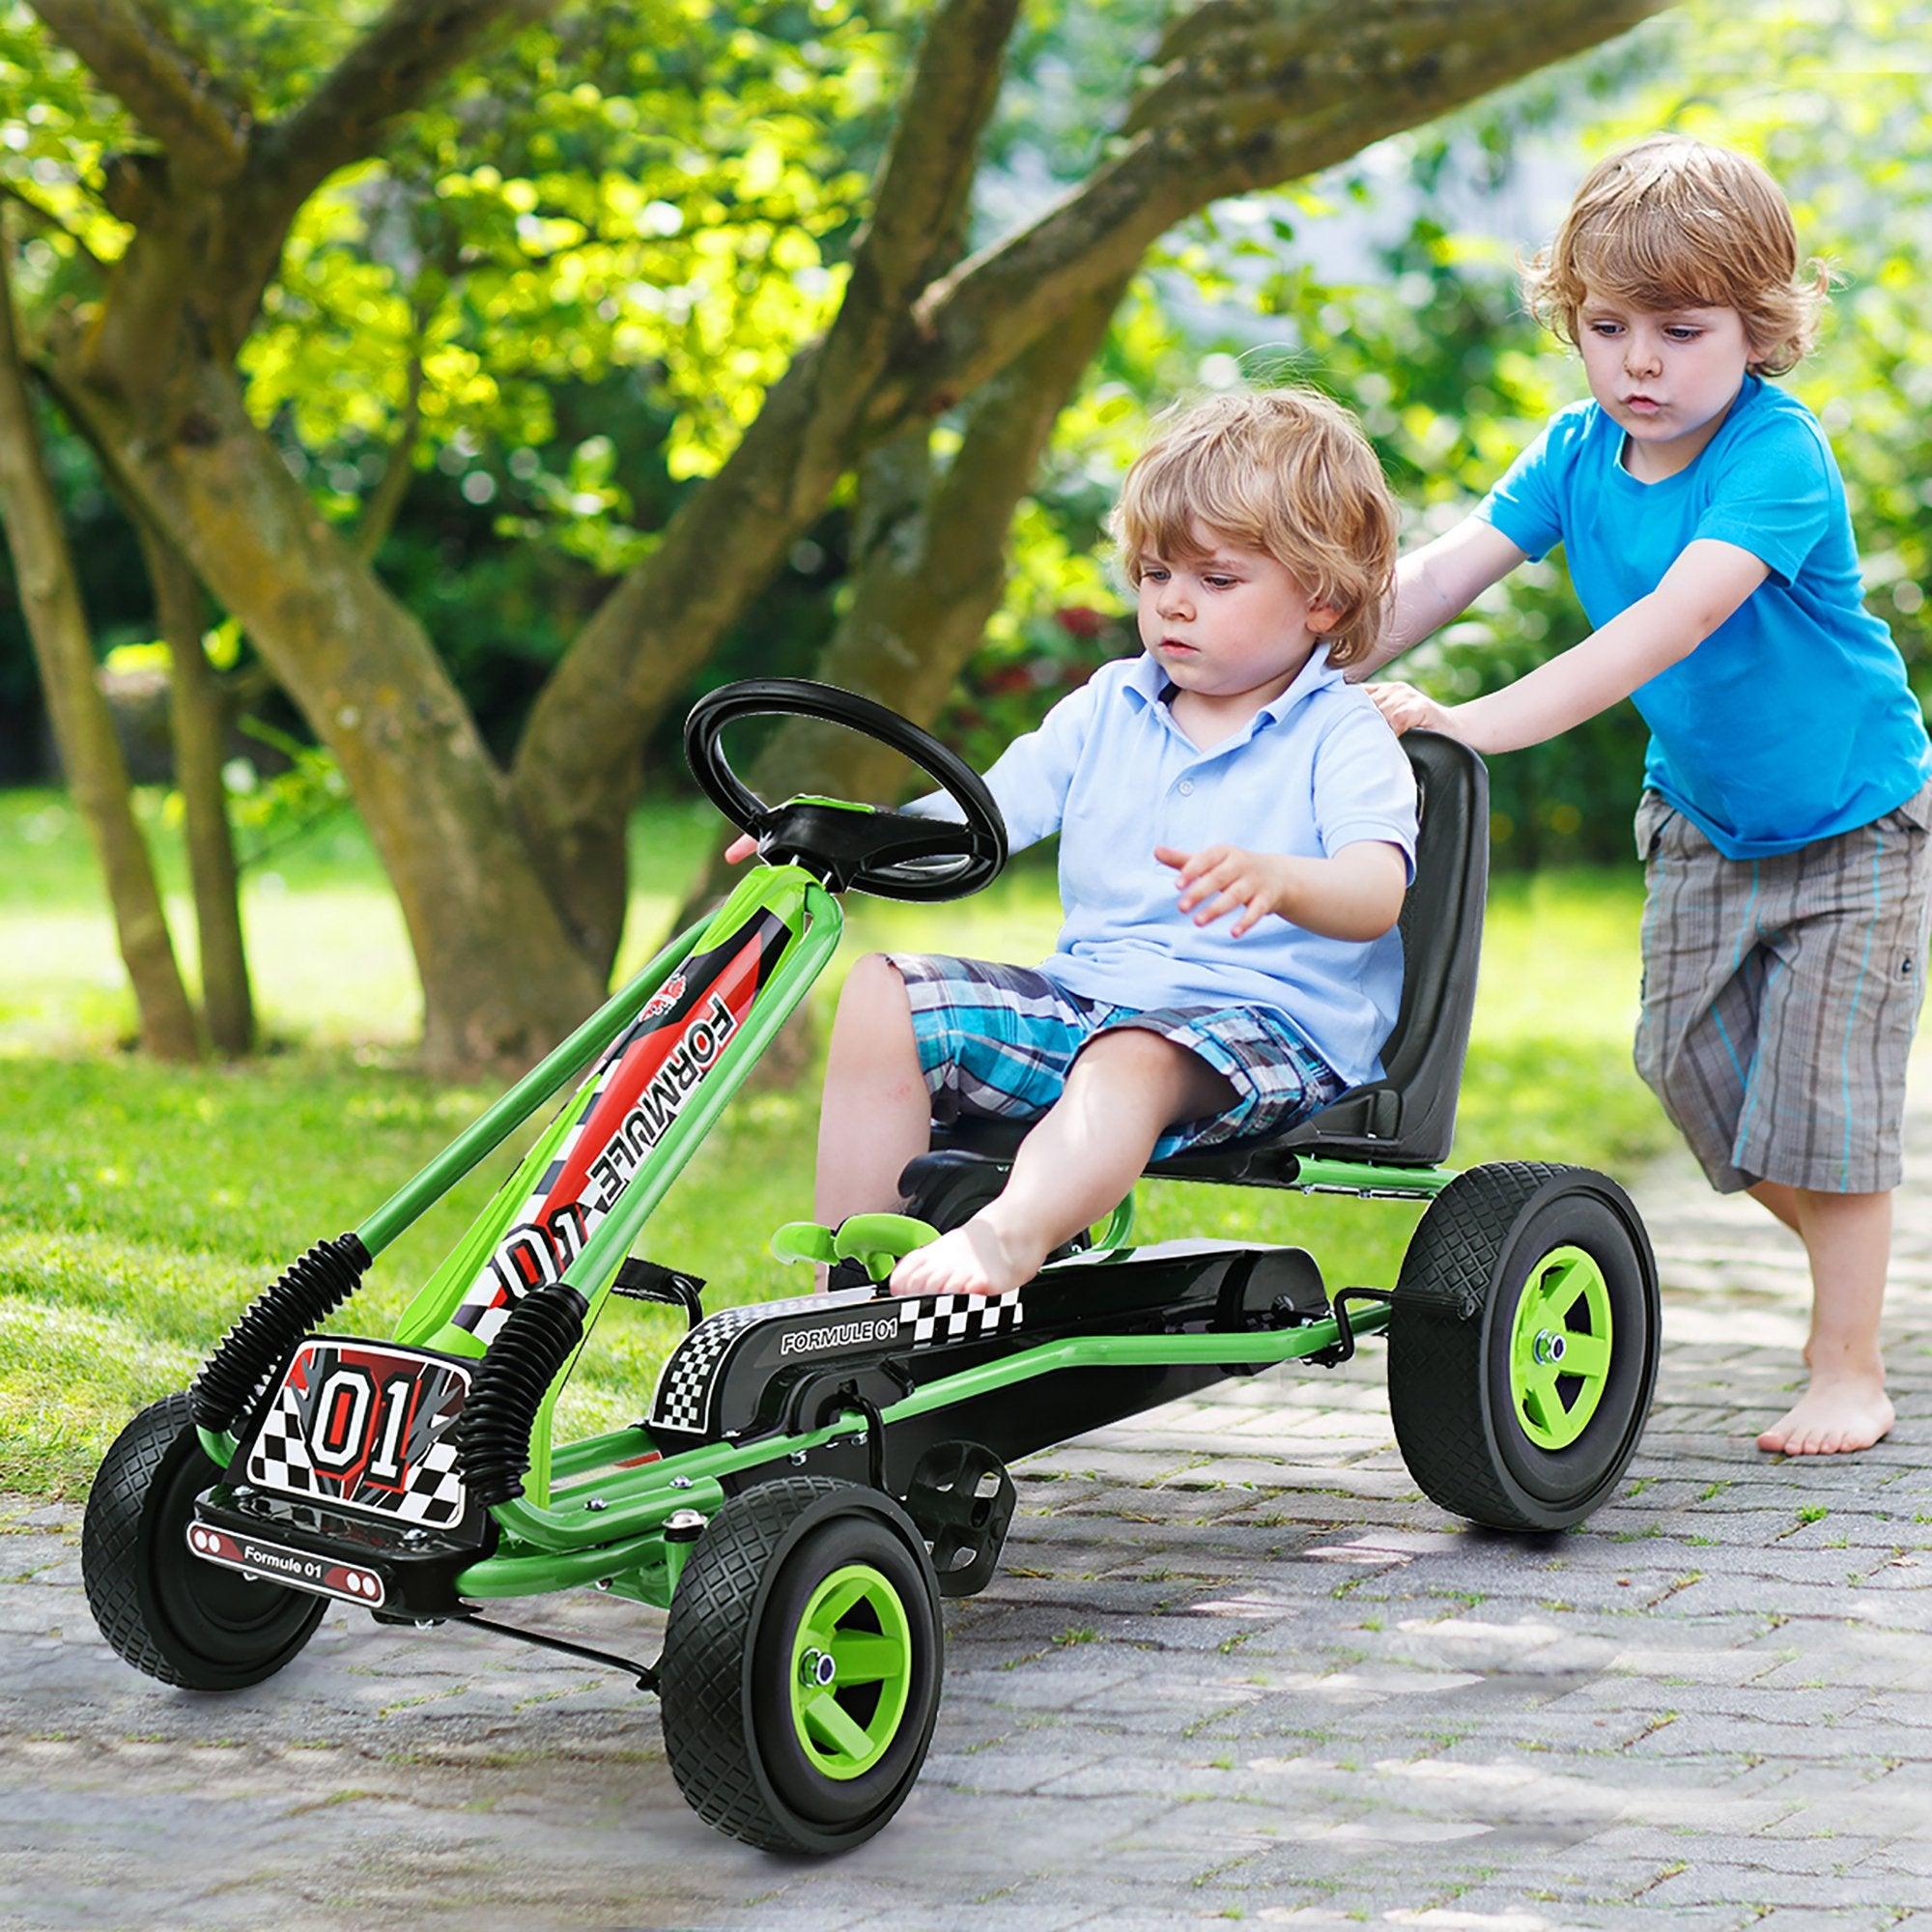 Pedal Go Karts, Activities for Kids, Stockeld Park